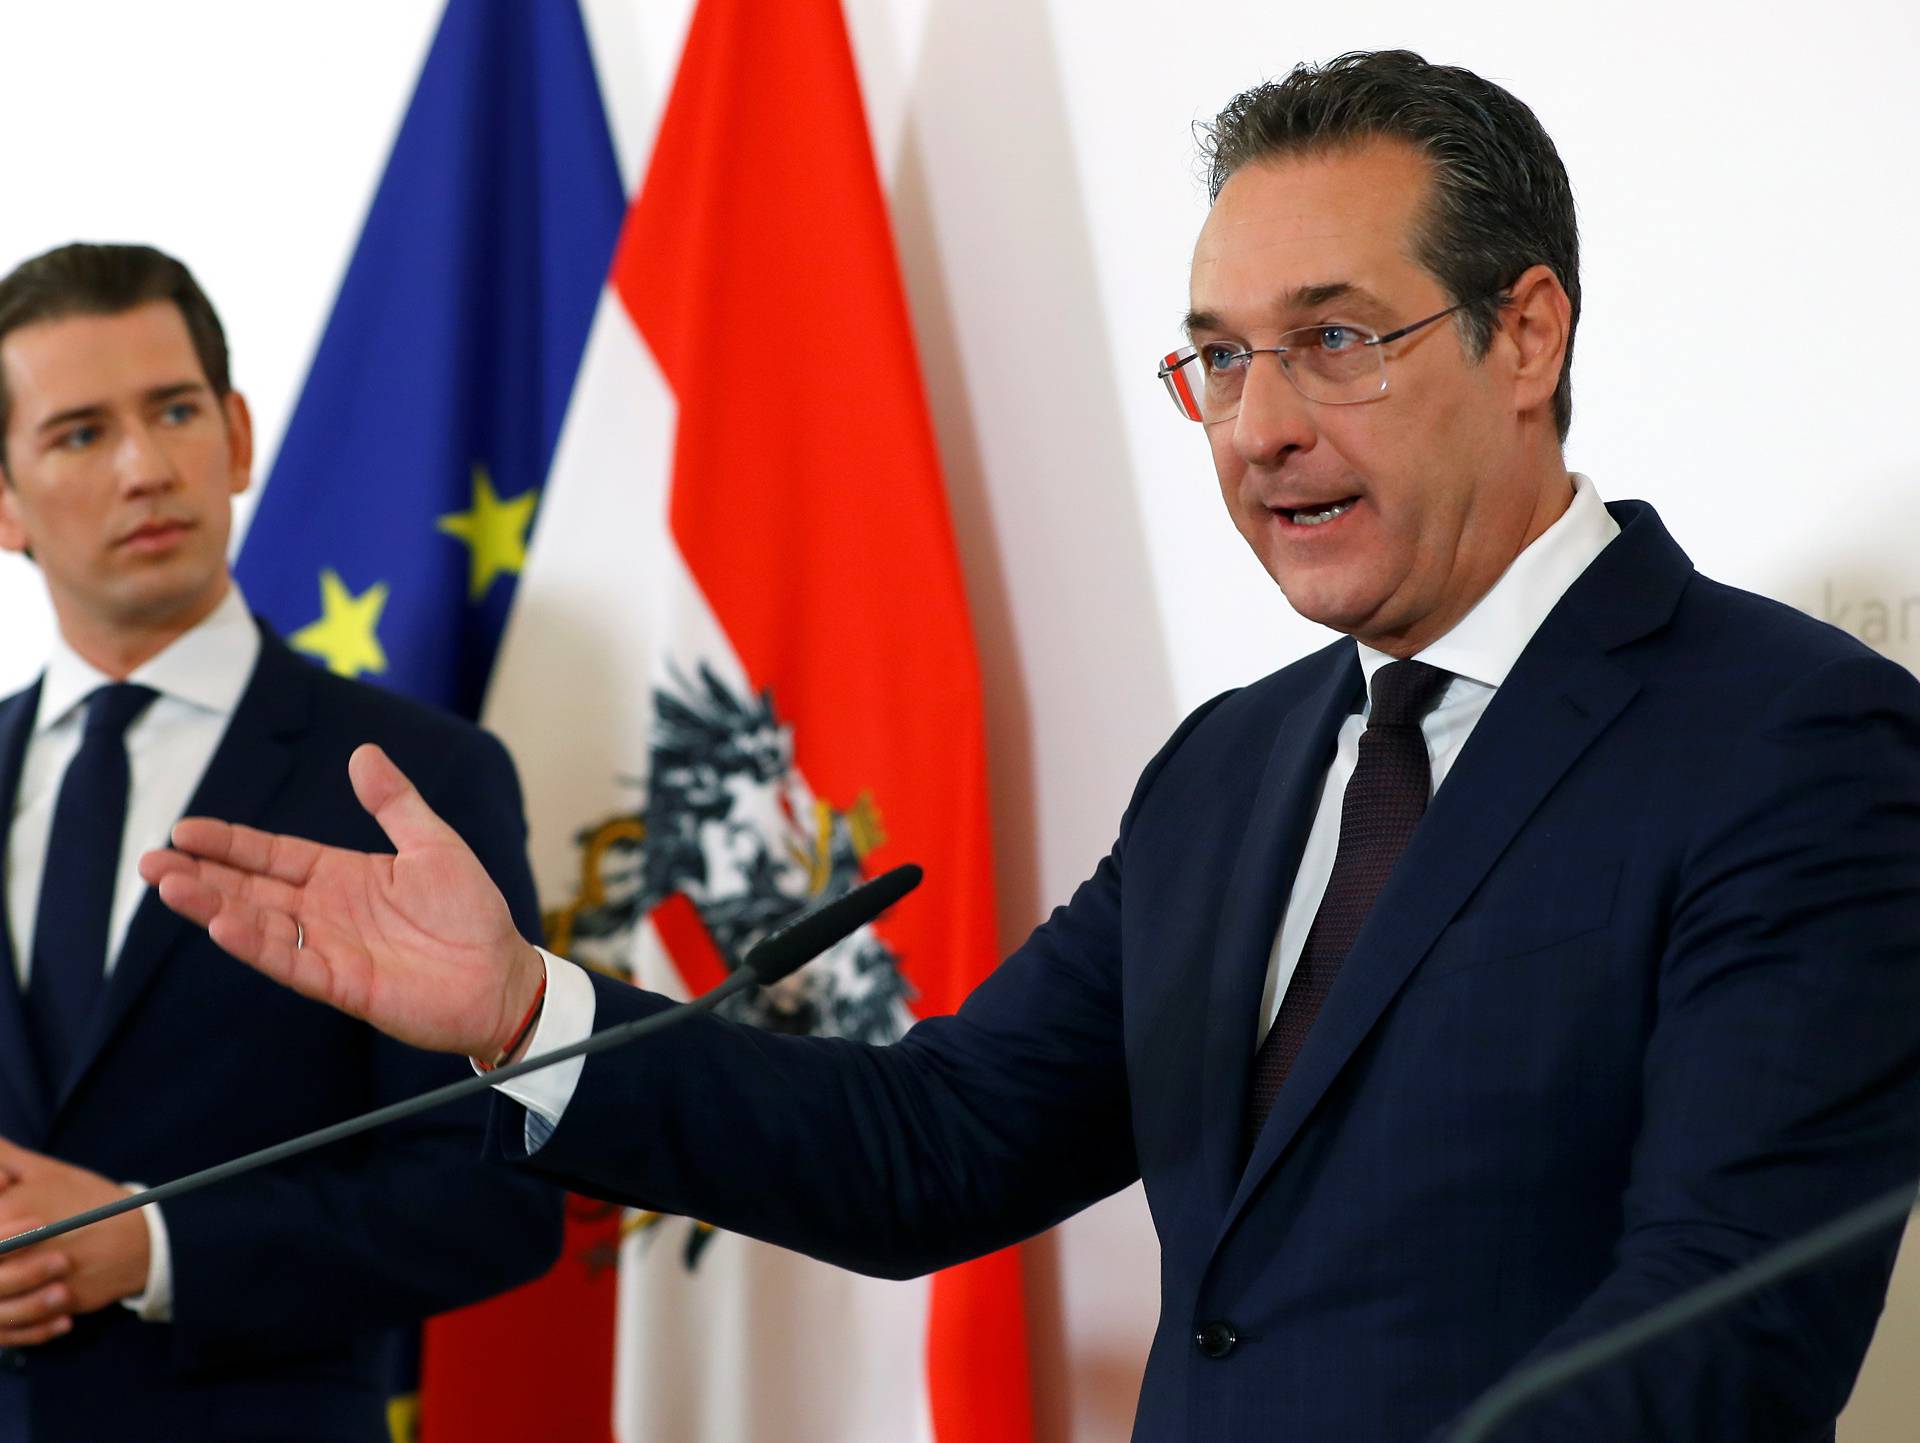 Austria's Chancellor Sebastian Kurz and Vice Chancellor Heinz-Christian Strache attend a news conference in Vienna